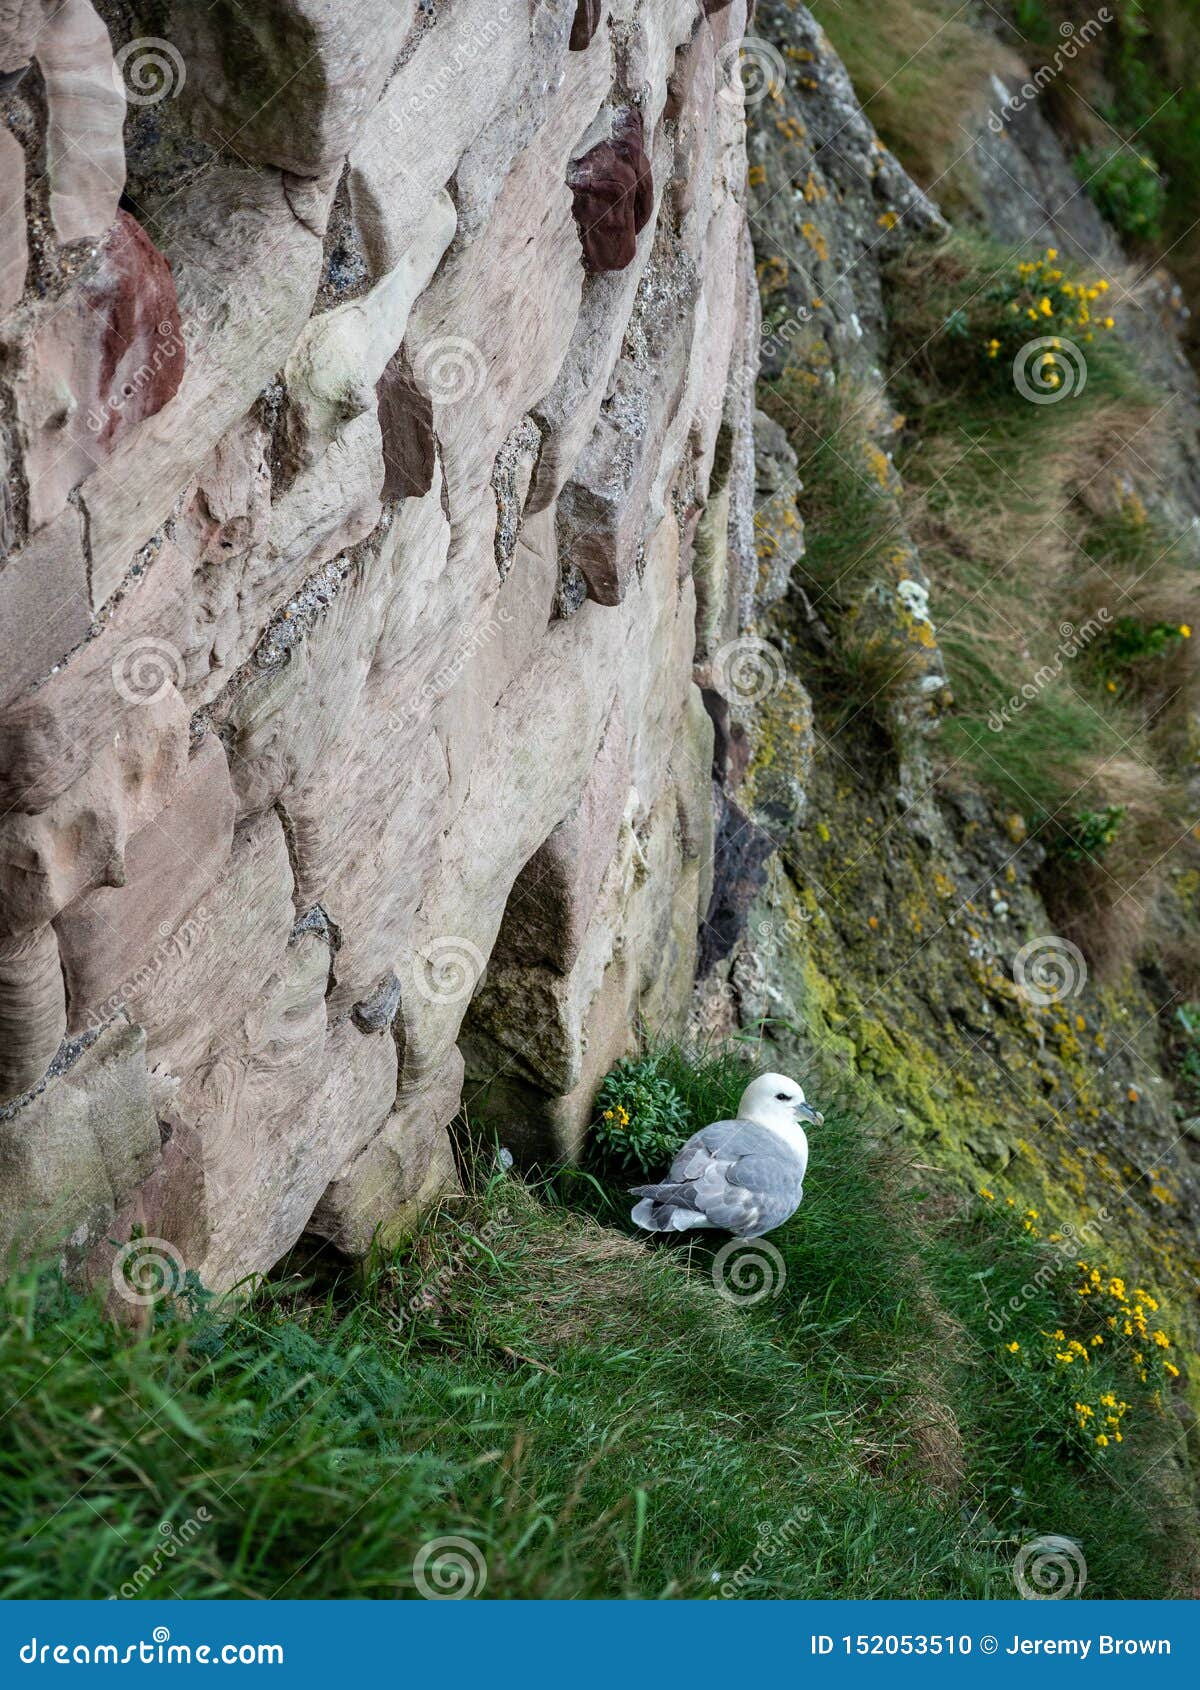 Petrel do norte, glacialis do Fulmarus, Berwick norte. Petrel do norte, glacialis do Fulmarus, aninhando-se fora das paredes arruinadas do castelo do tantallon, castelo escocês dos mediados do século XIV, Berwick norte